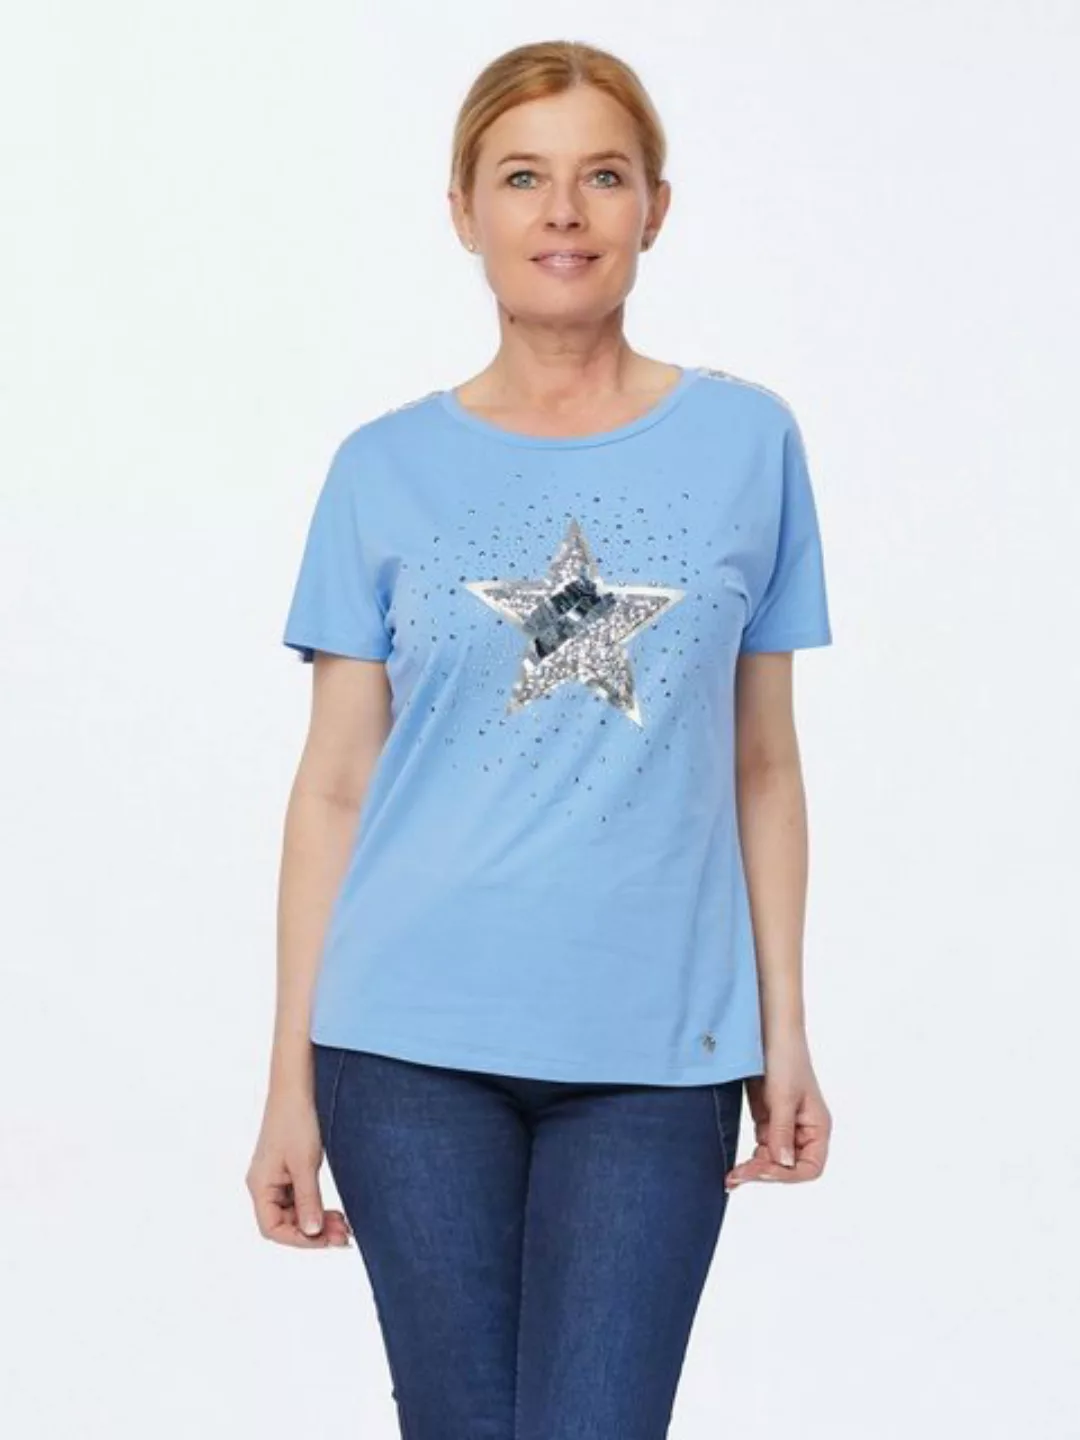 Christian Materne T-Shirt Kurzarmbluse koerpernah mit Stern-Motiv günstig online kaufen